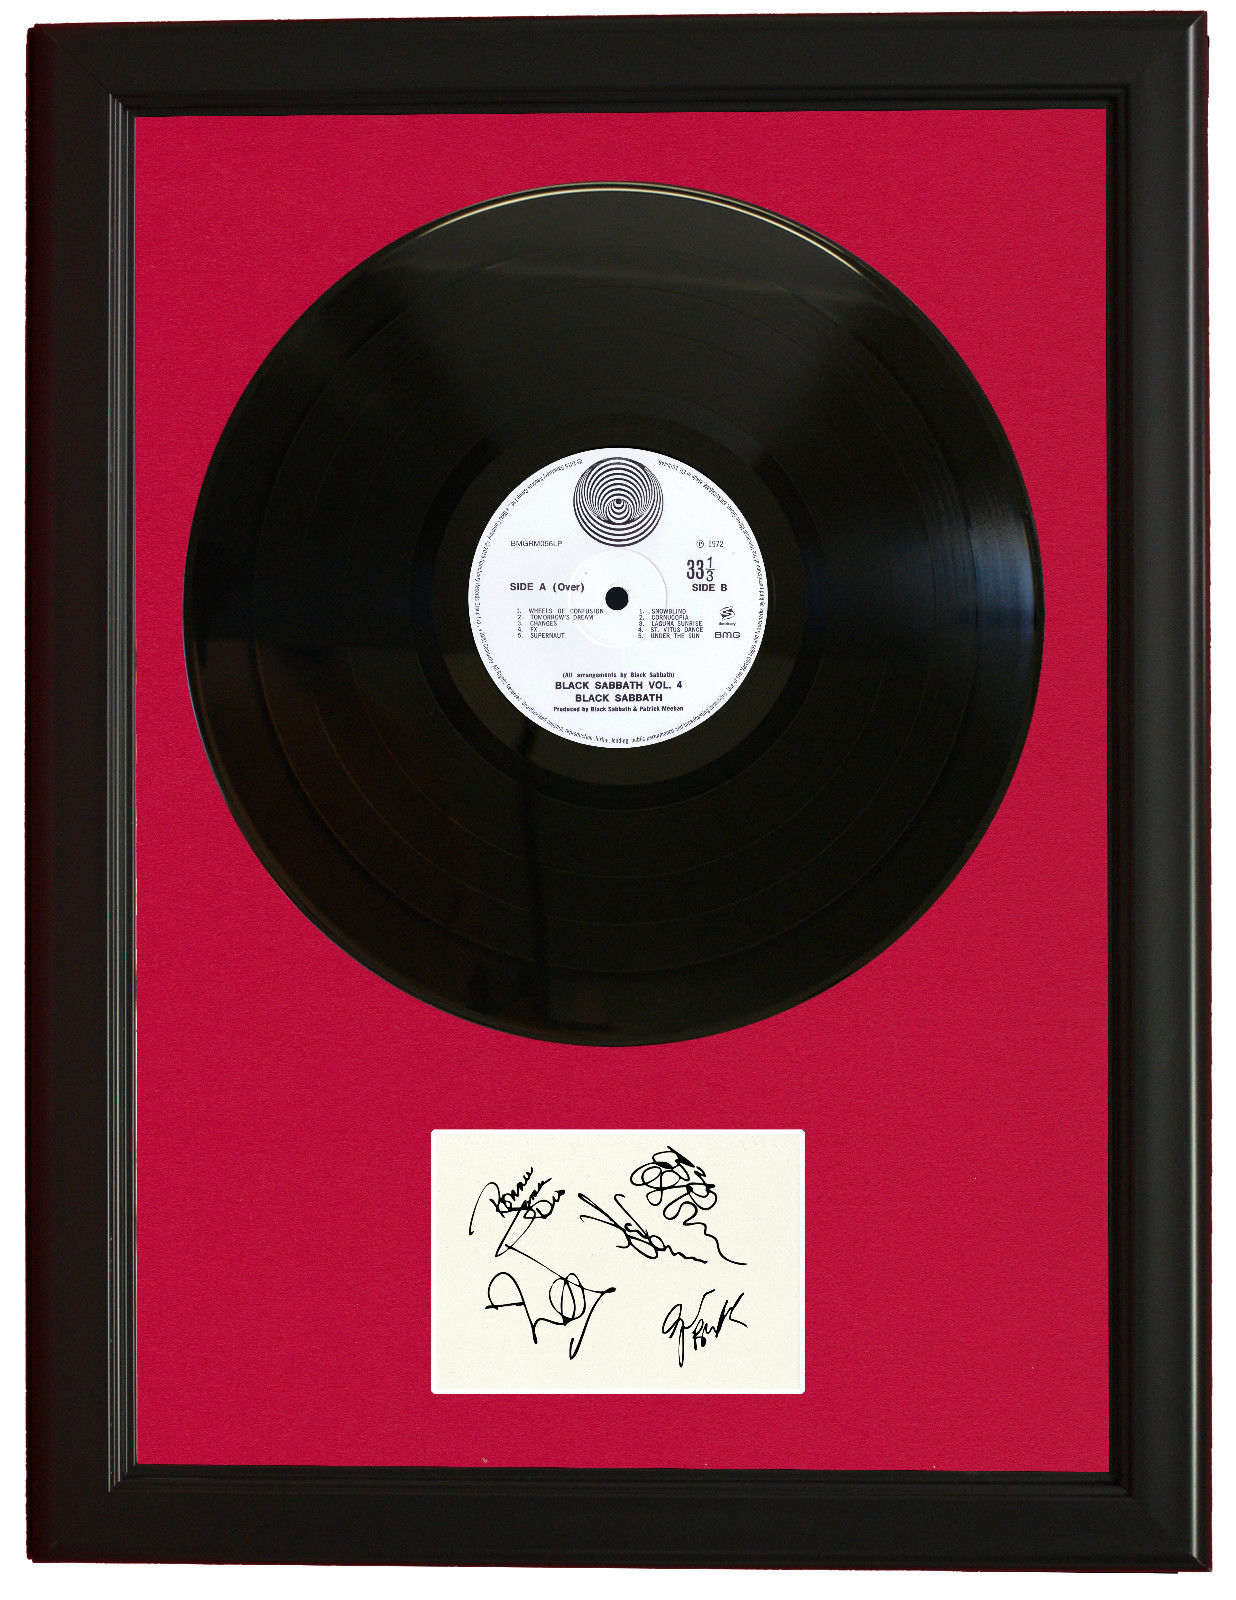 Black Sabbath Black Wood Framed Lp Signature Display - Gold Record Outlet Album and Disc Collectible Memorabilia